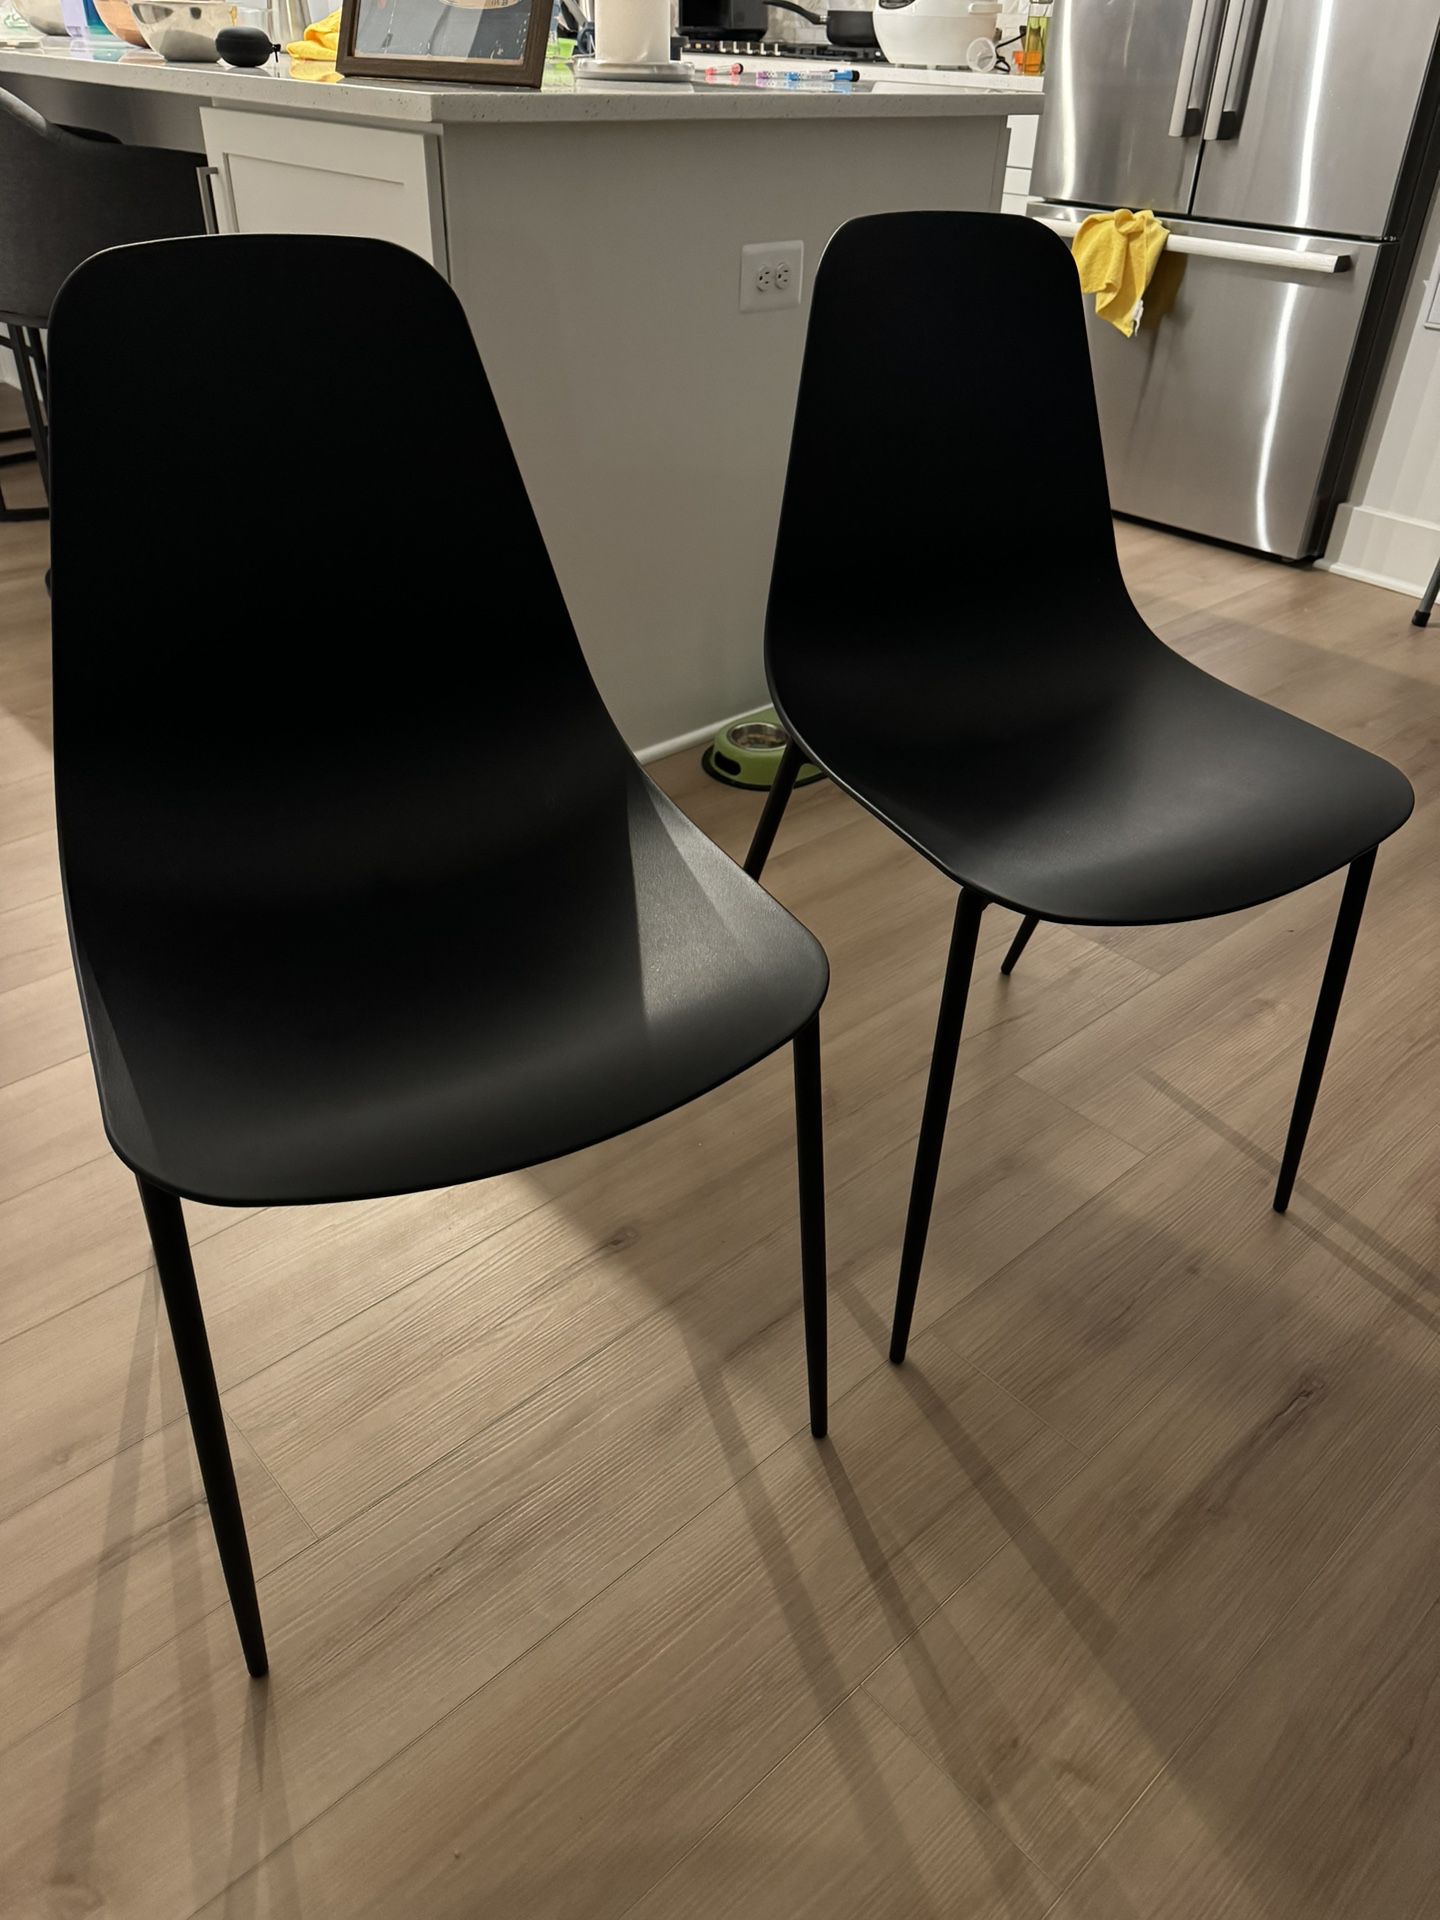 Article Svelti Black Dining Chairs